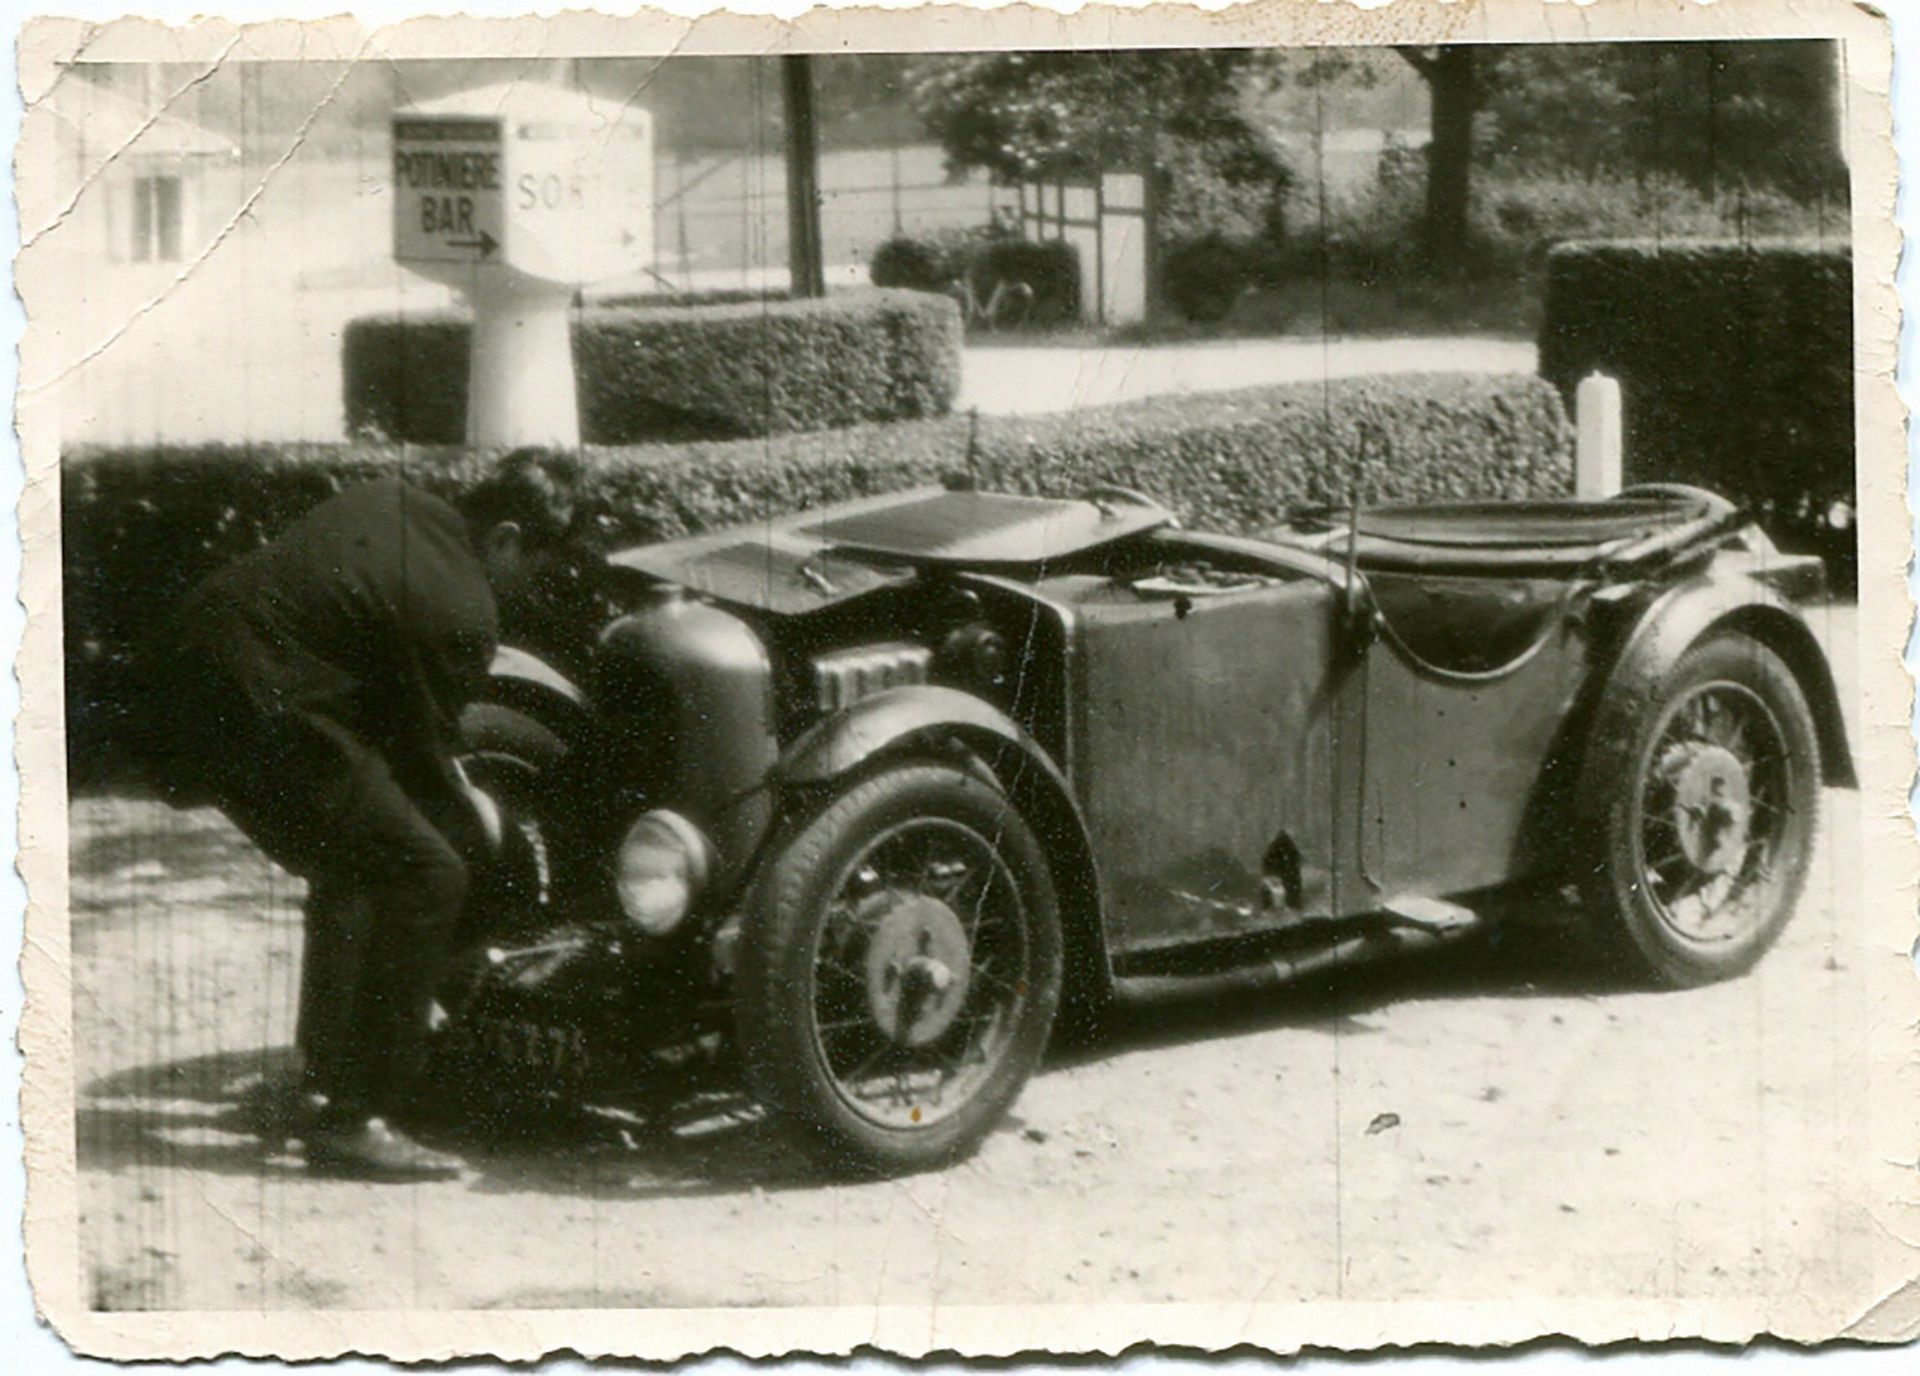 Lafont Spéciale (G.A.R.) Circa 1928 底盘 n°1 发动机 n°18819 CST4 型 
变速箱编号 3947 
法国注册&hellip;